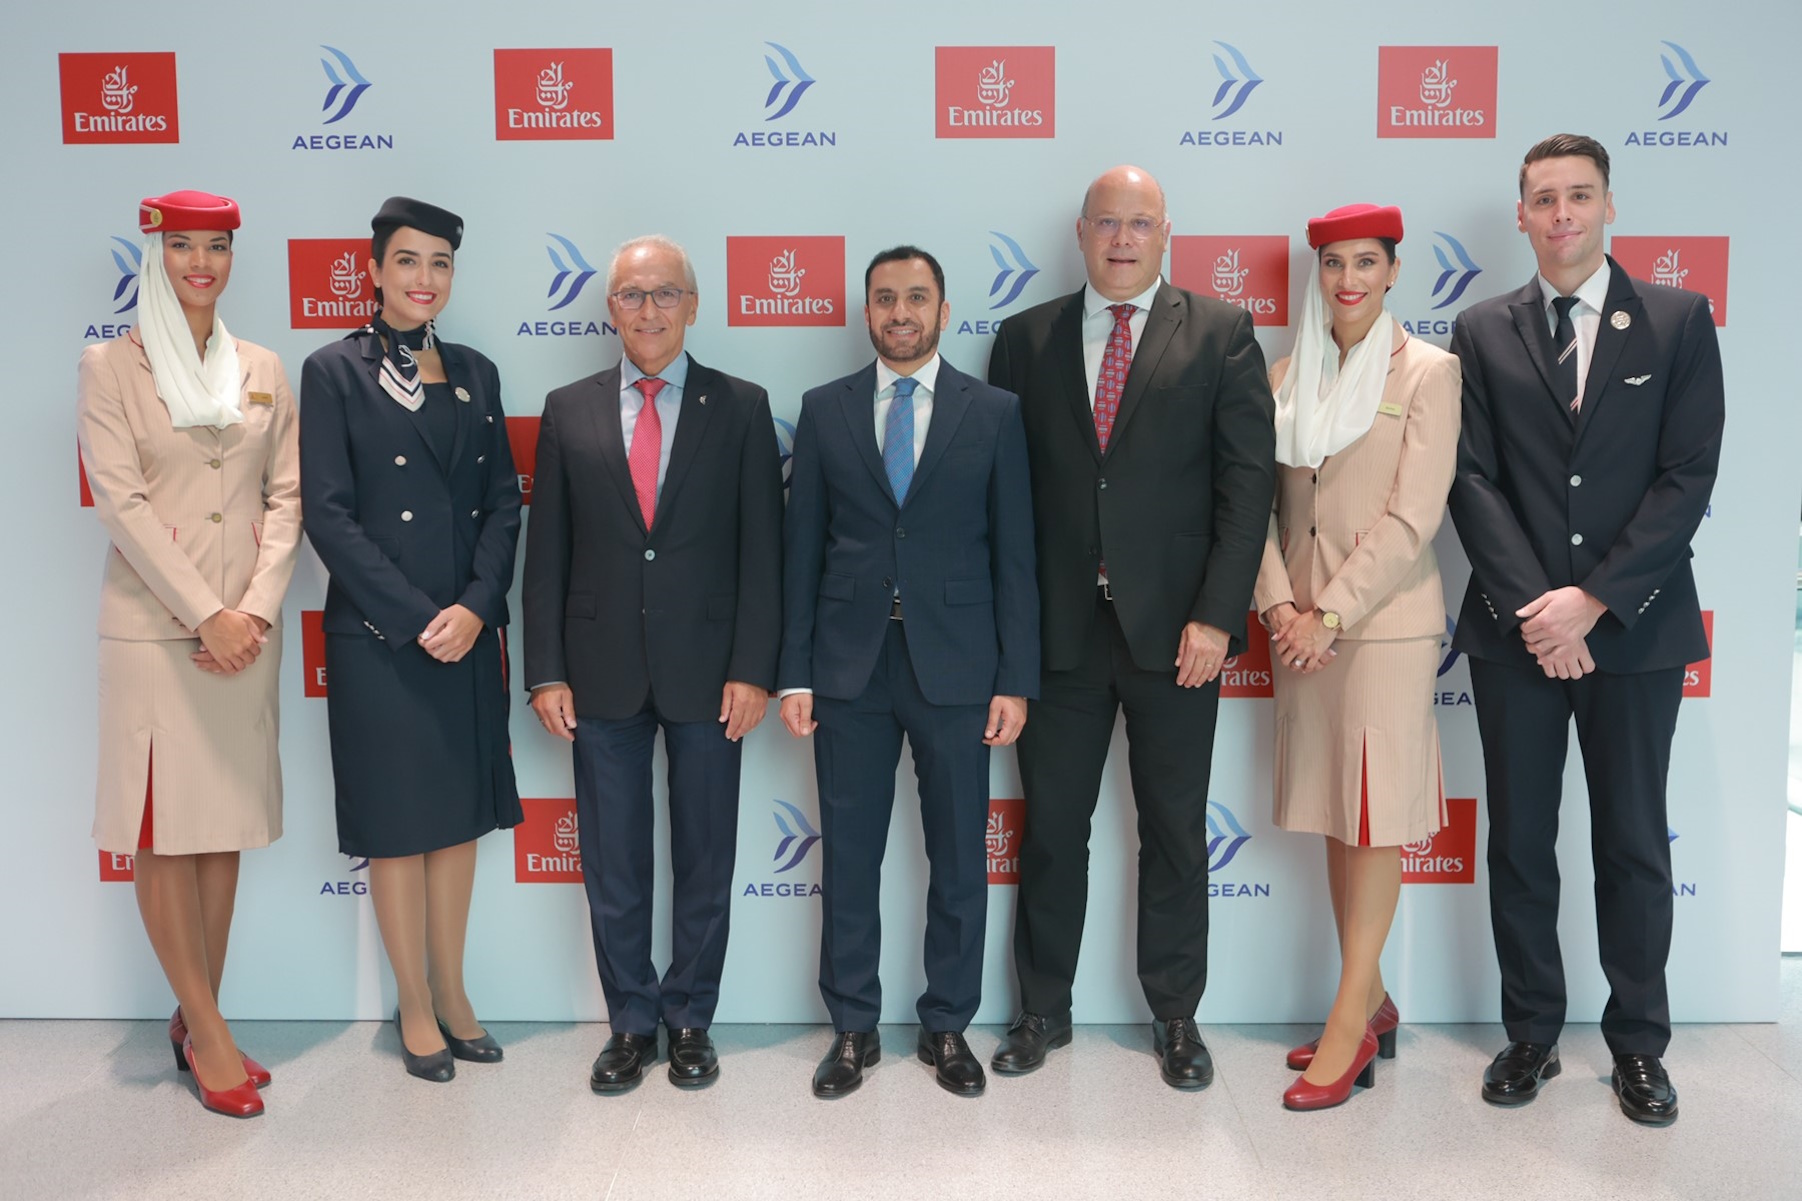 AEGEAN και Emirates επεκτείνουν τη συνεργασία τους για πτήσεις κοινού κωδικού προσθέτοντας το δρομολόγιο Αθήνα ‑ Νέα Υόρκη